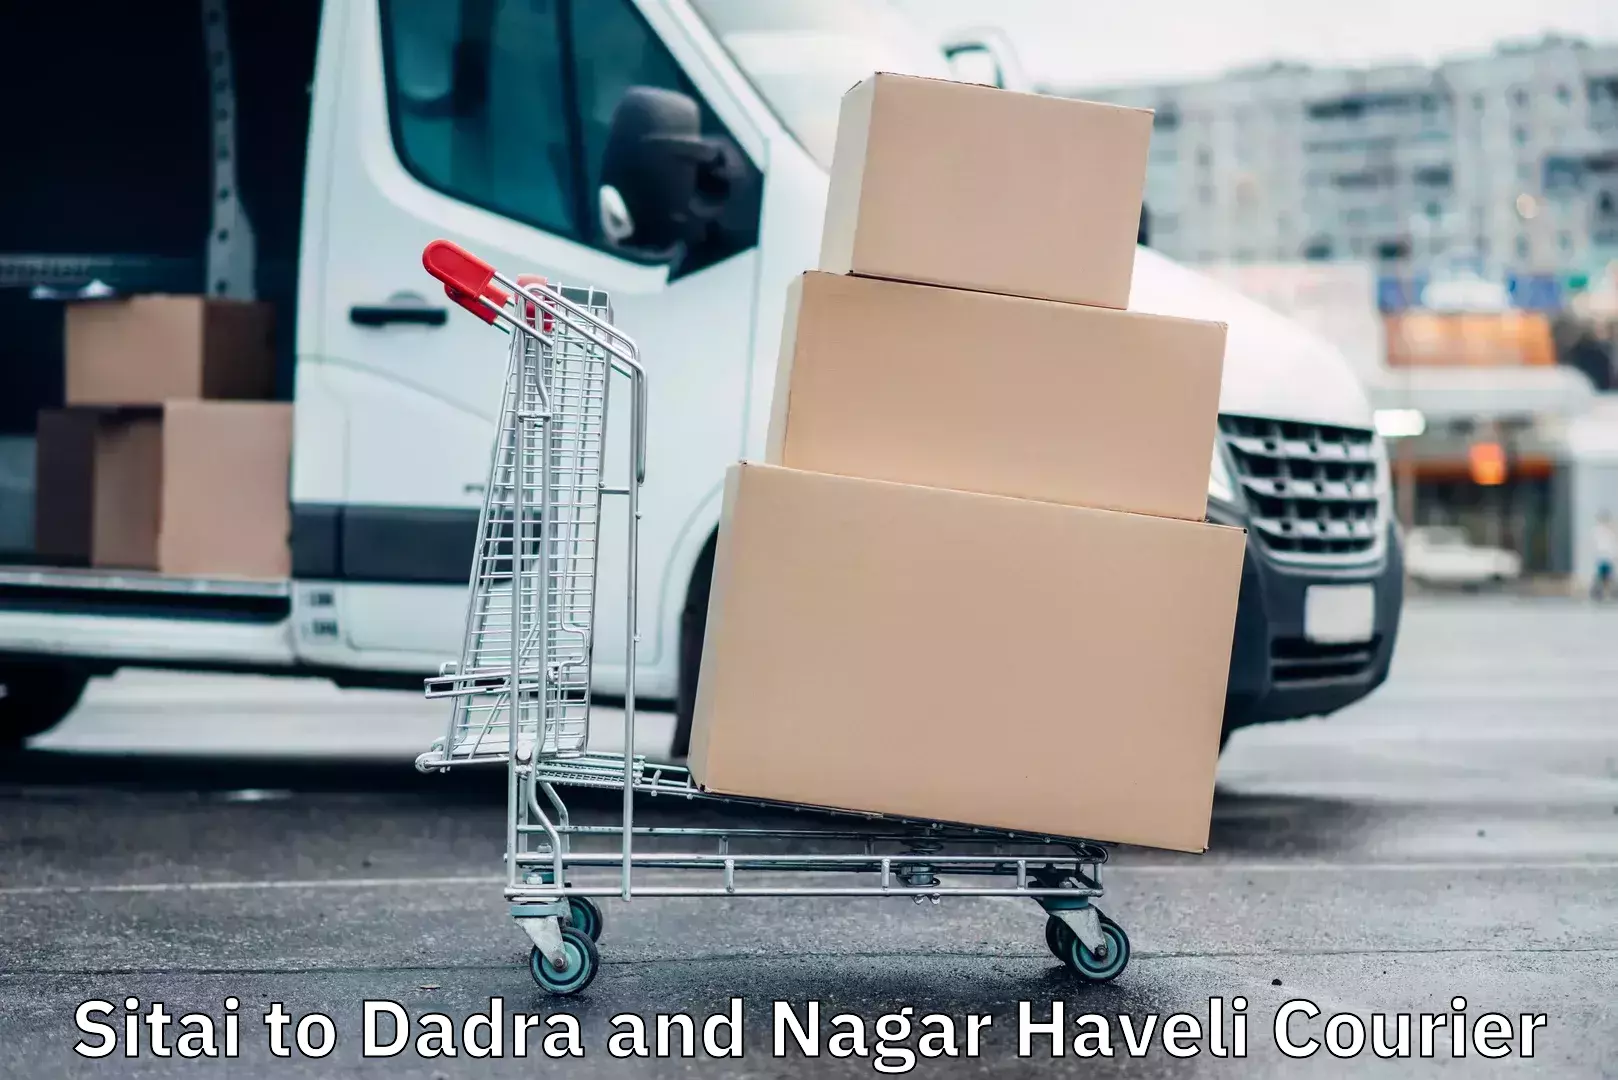 Urgent courier needs in Sitai to Dadra and Nagar Haveli